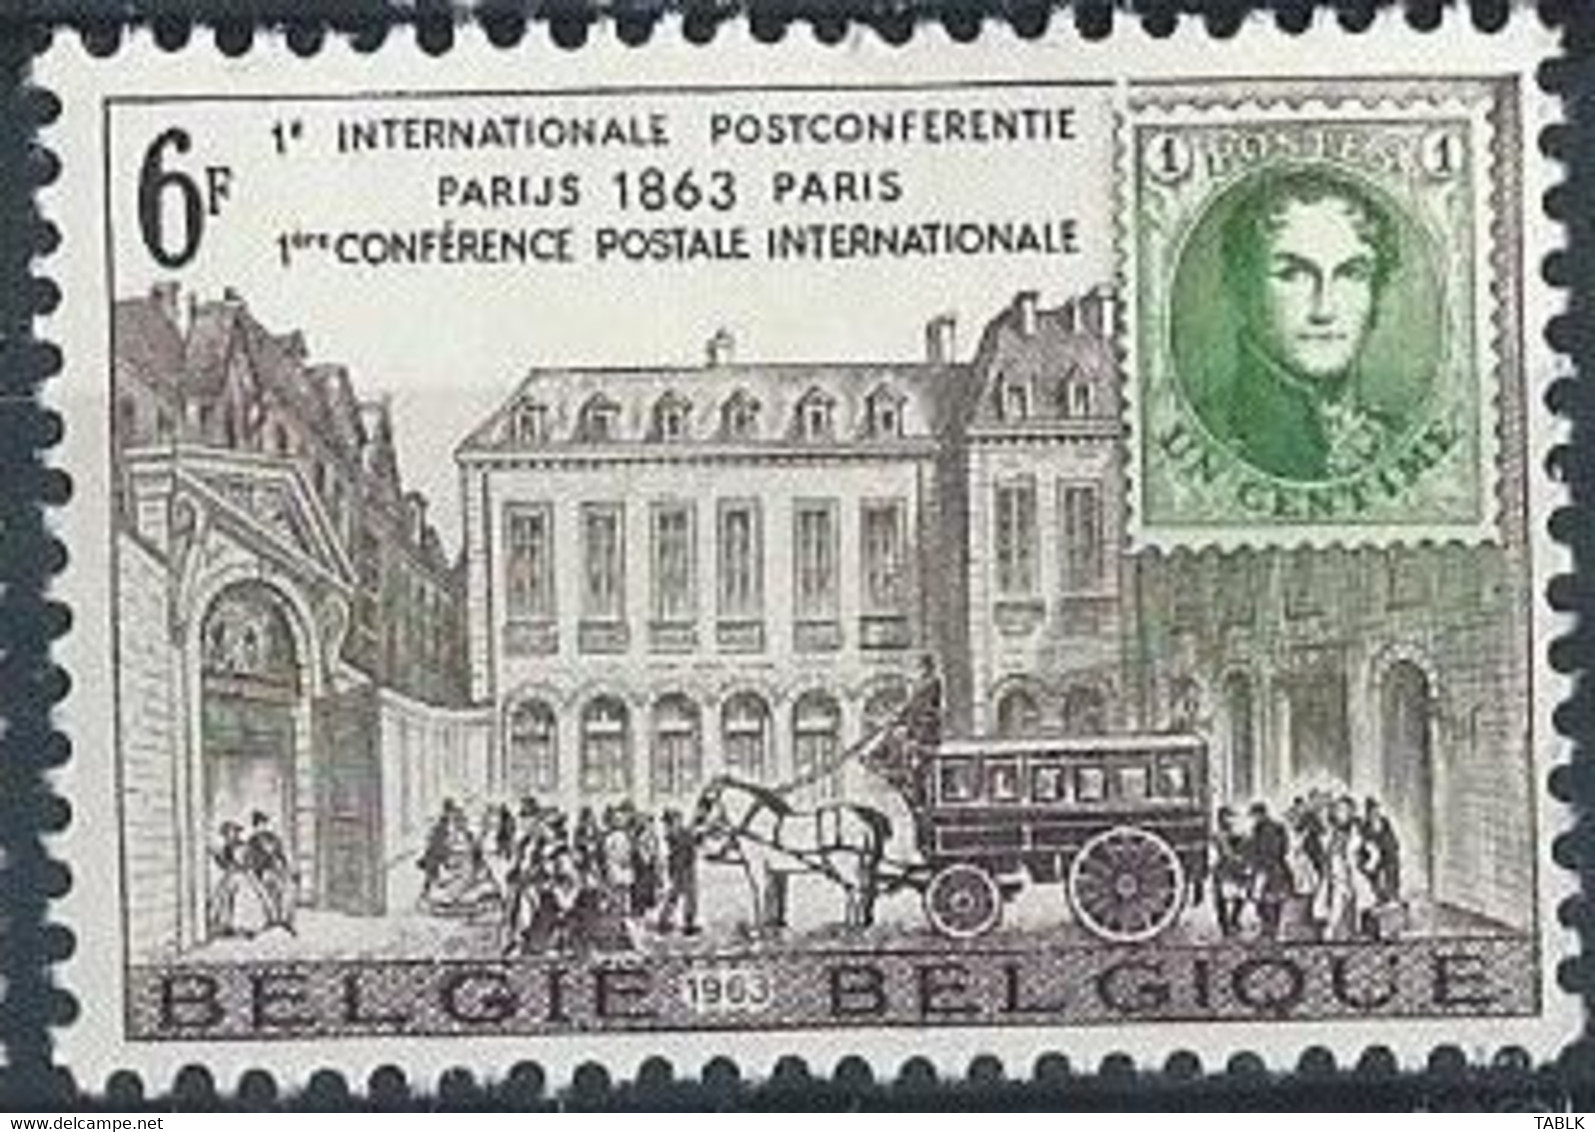 Z0356 - BELGIE - BELGIUM - 1963 - Nr 1250 - INTERNAT. POSTCONFERENTIE - THEMA POST - Unused Stamps